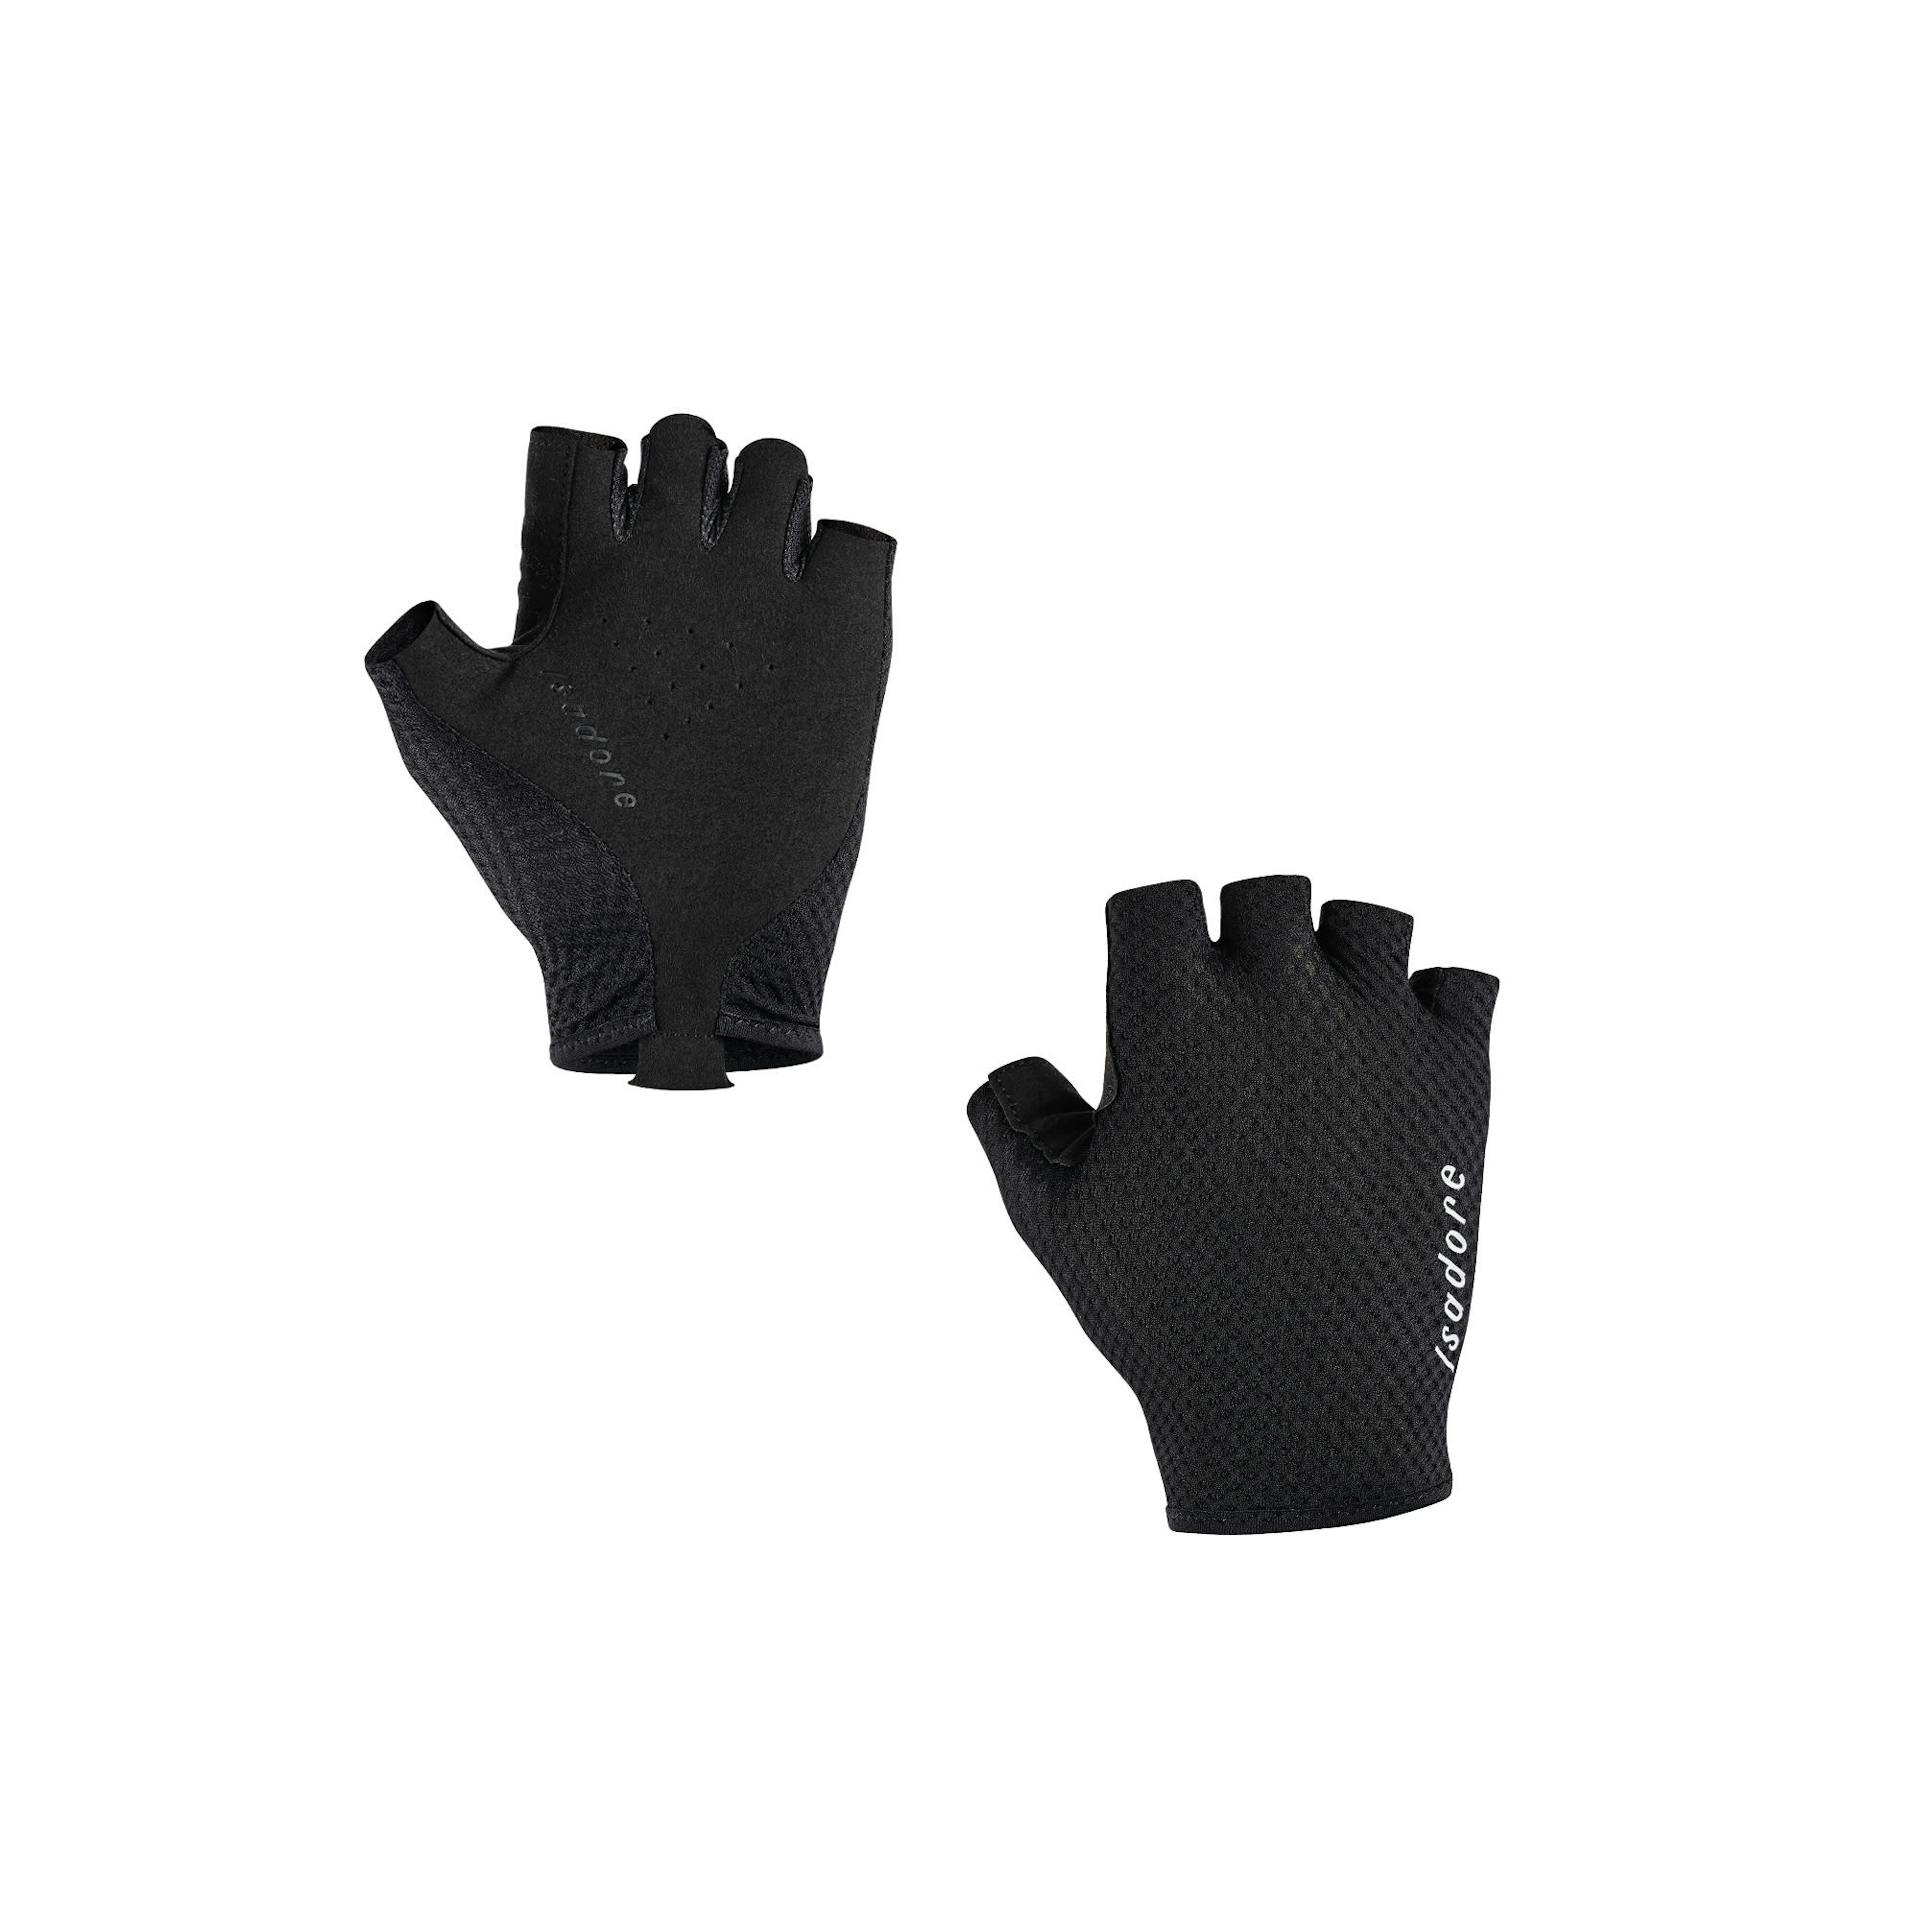 Signature Light Gloves - Black
                        